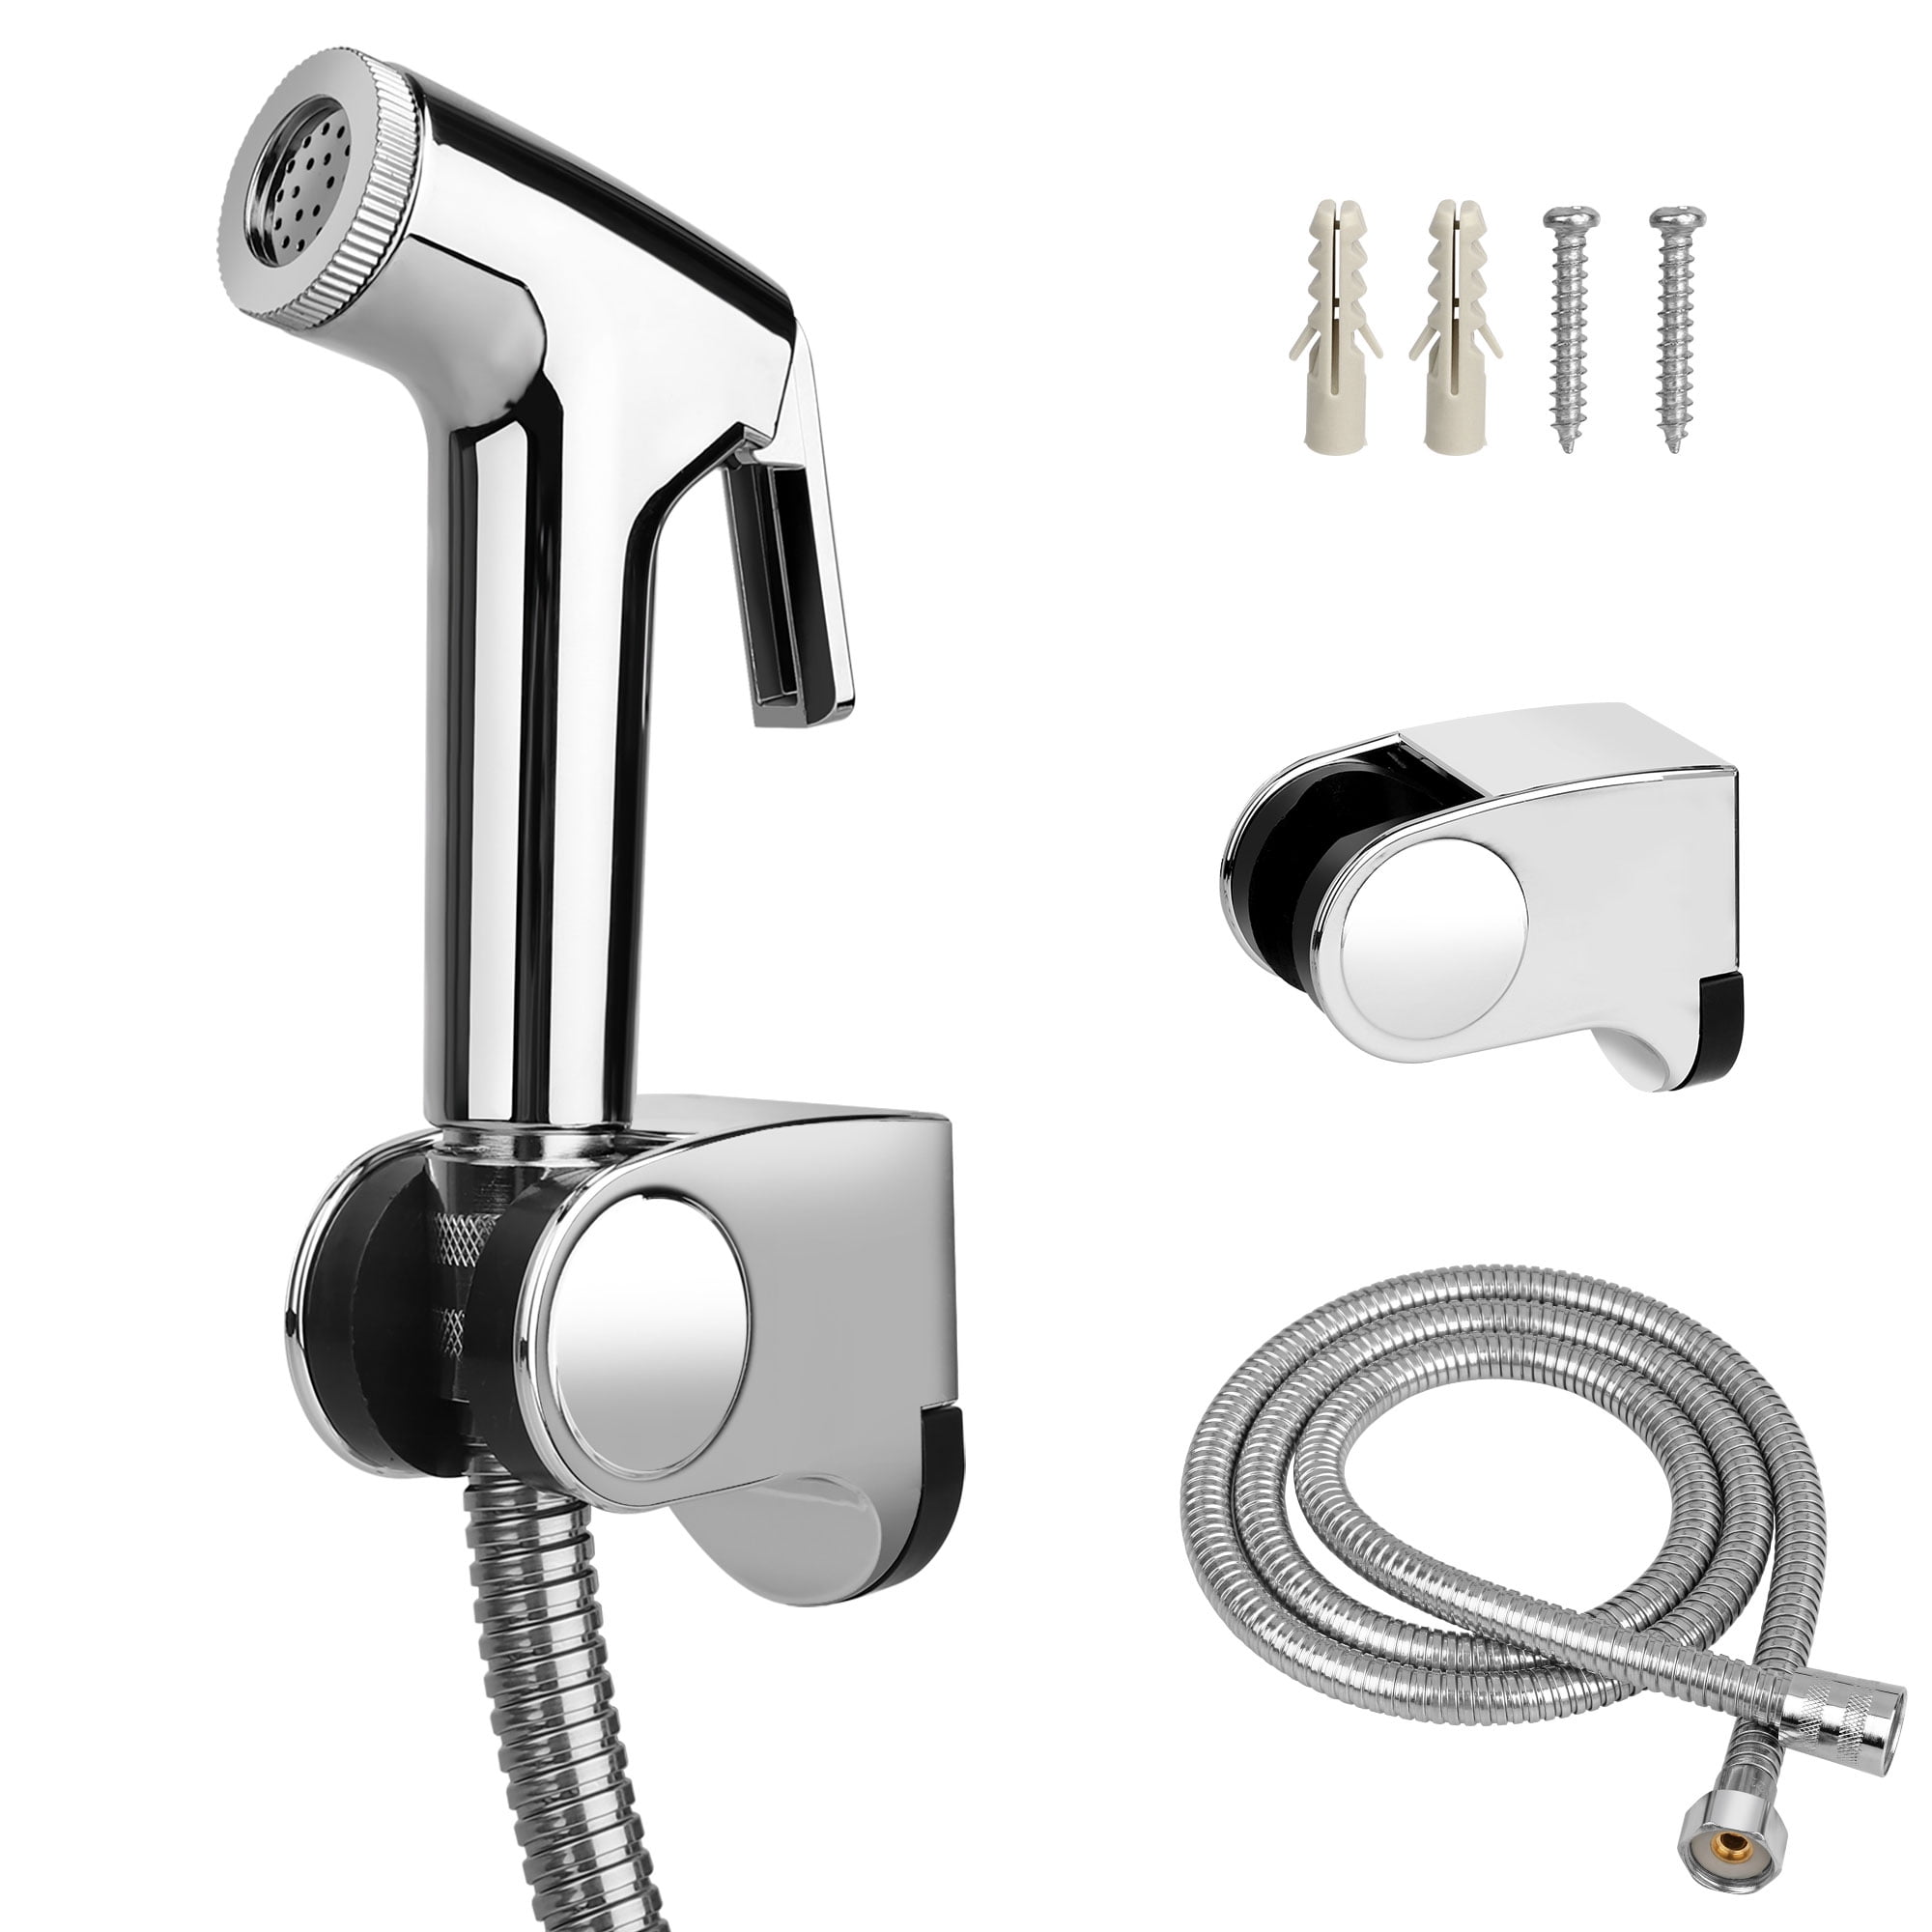 copper gold silver Toilet Water spray bidet Sprayer wc faucet enema cleaner  shower head hose kit douchette Bathroom accessories - AliExpress